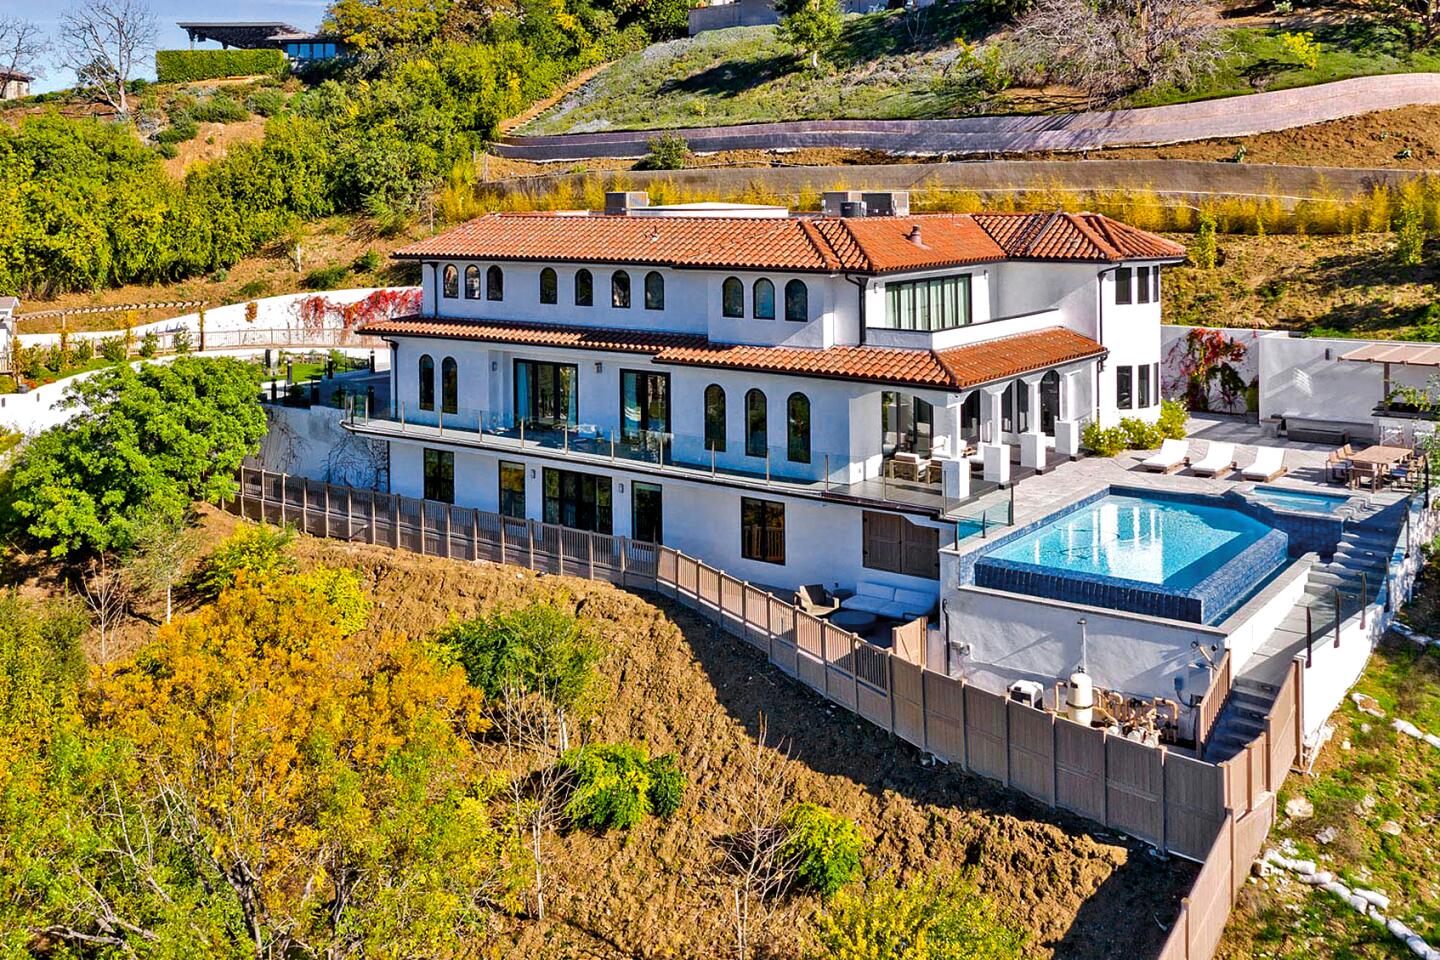 Ventura Hillside Home / DARX Studio